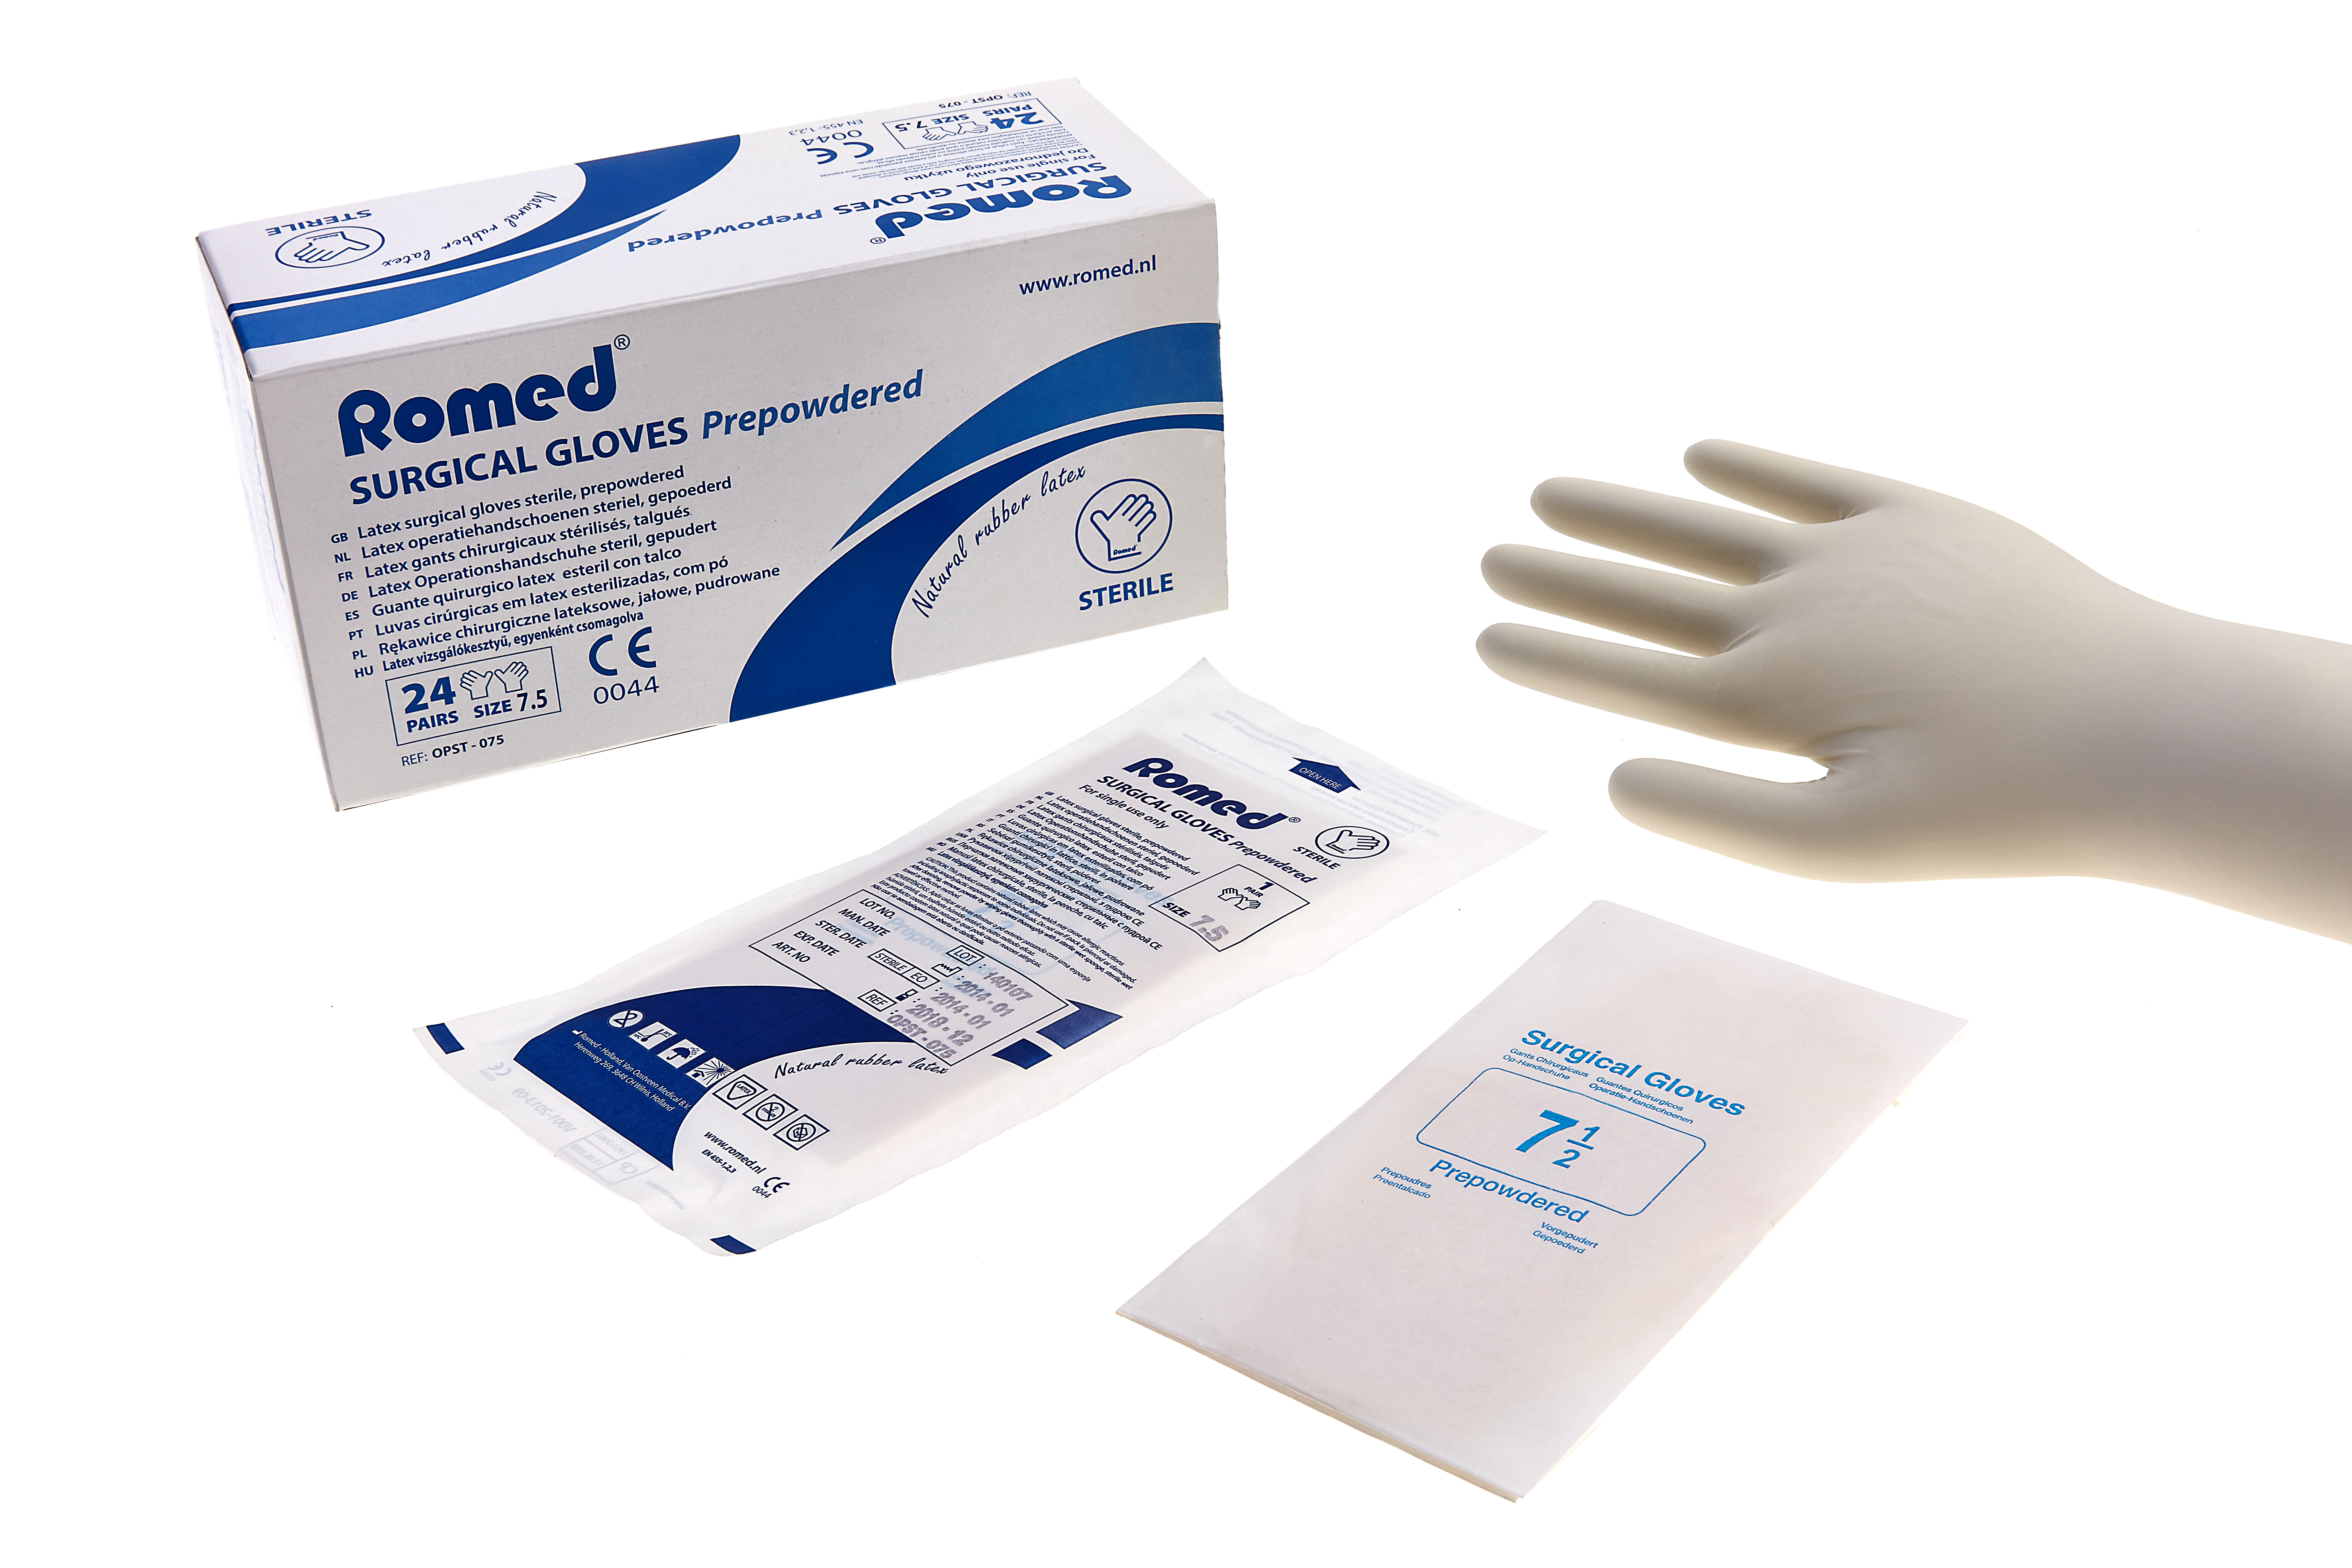 Latex surgical gloves, prepowdered, sterile